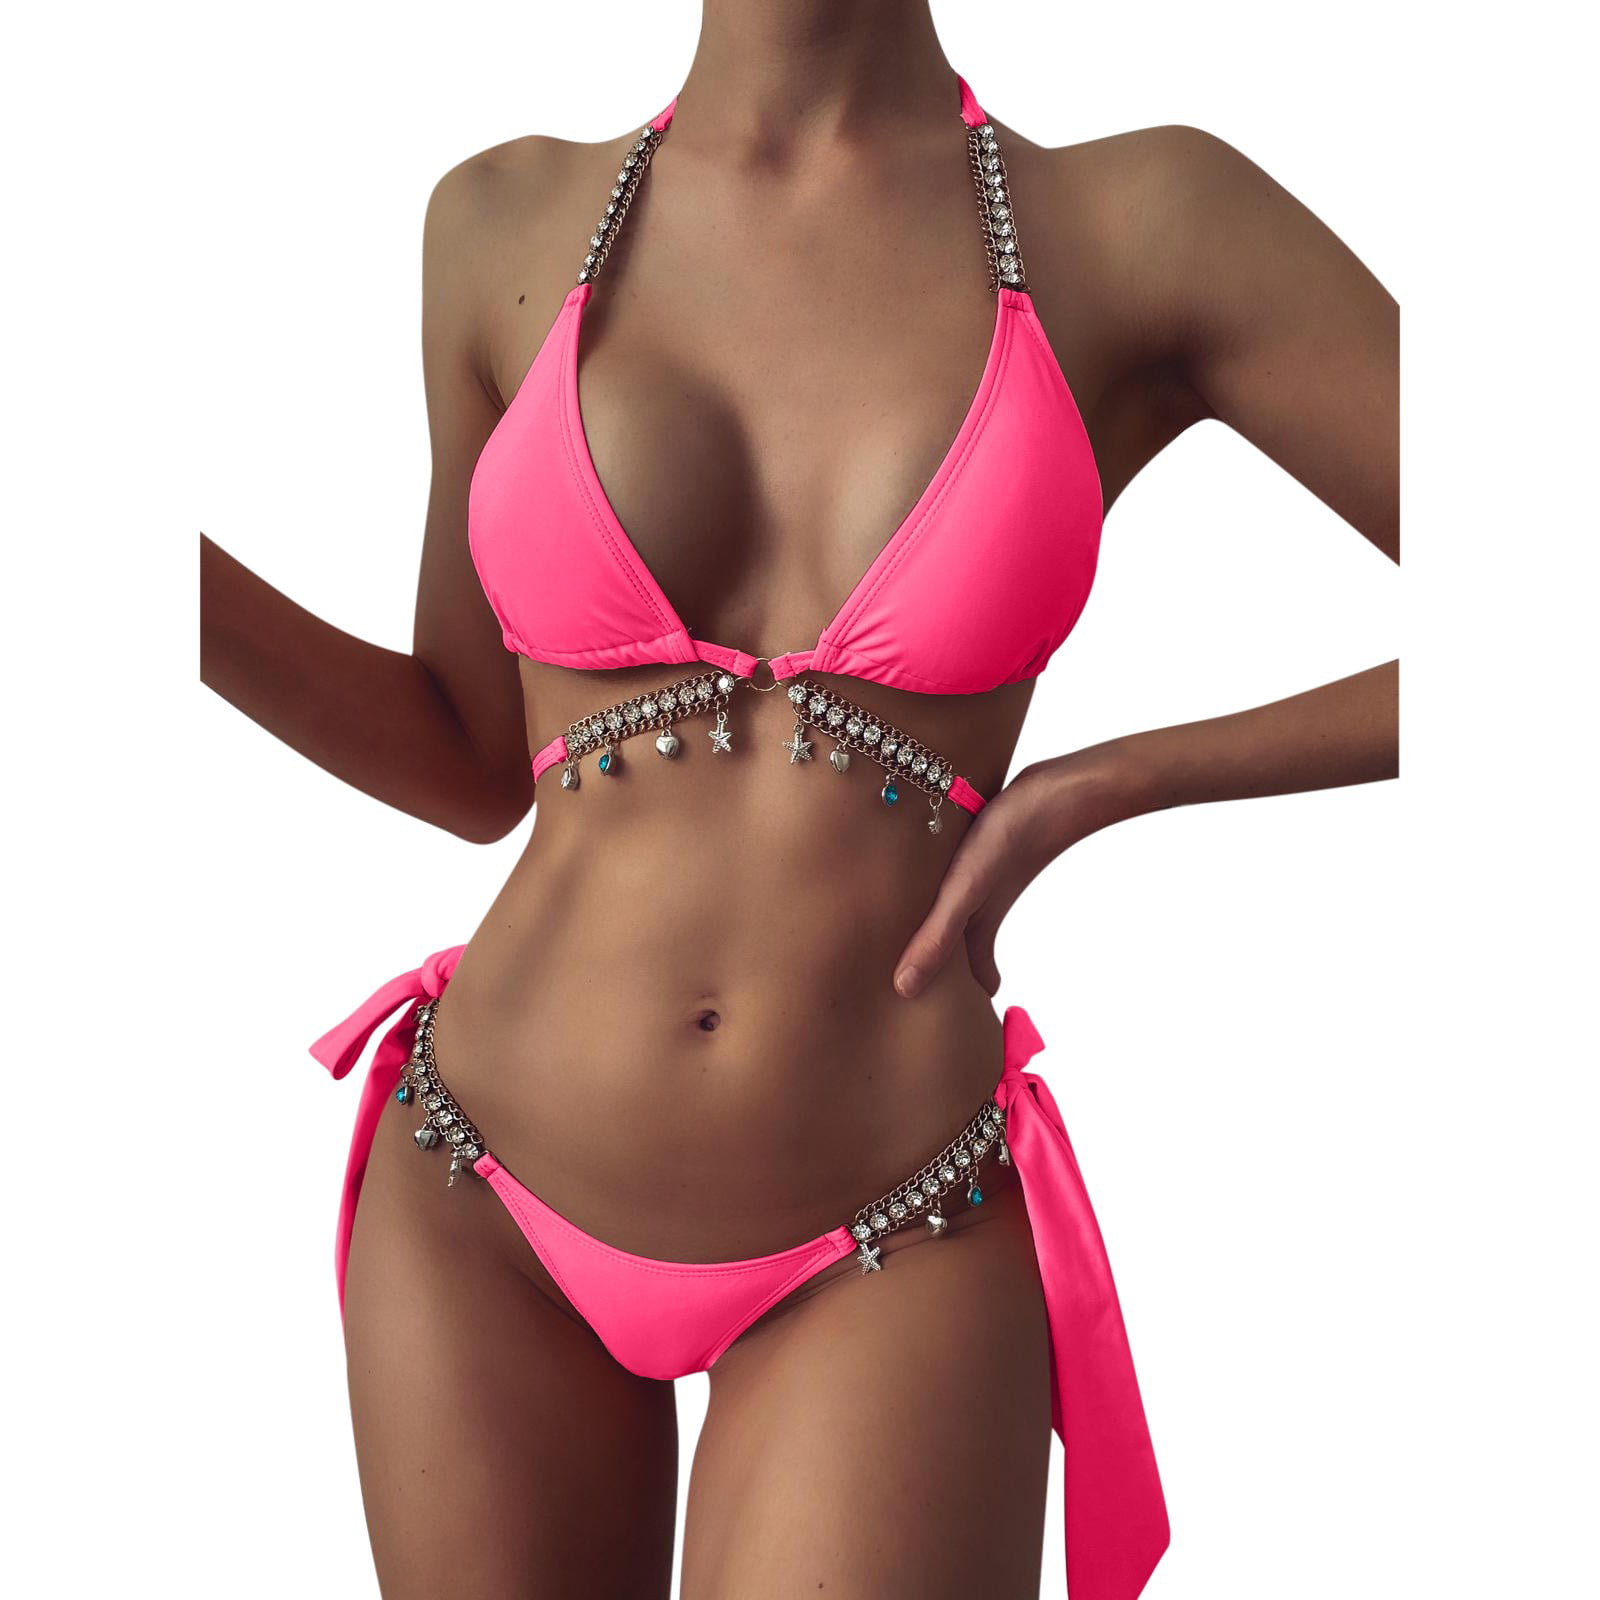 Pink Pokemon String Bikini Gift Women Beach Summer - Banantees